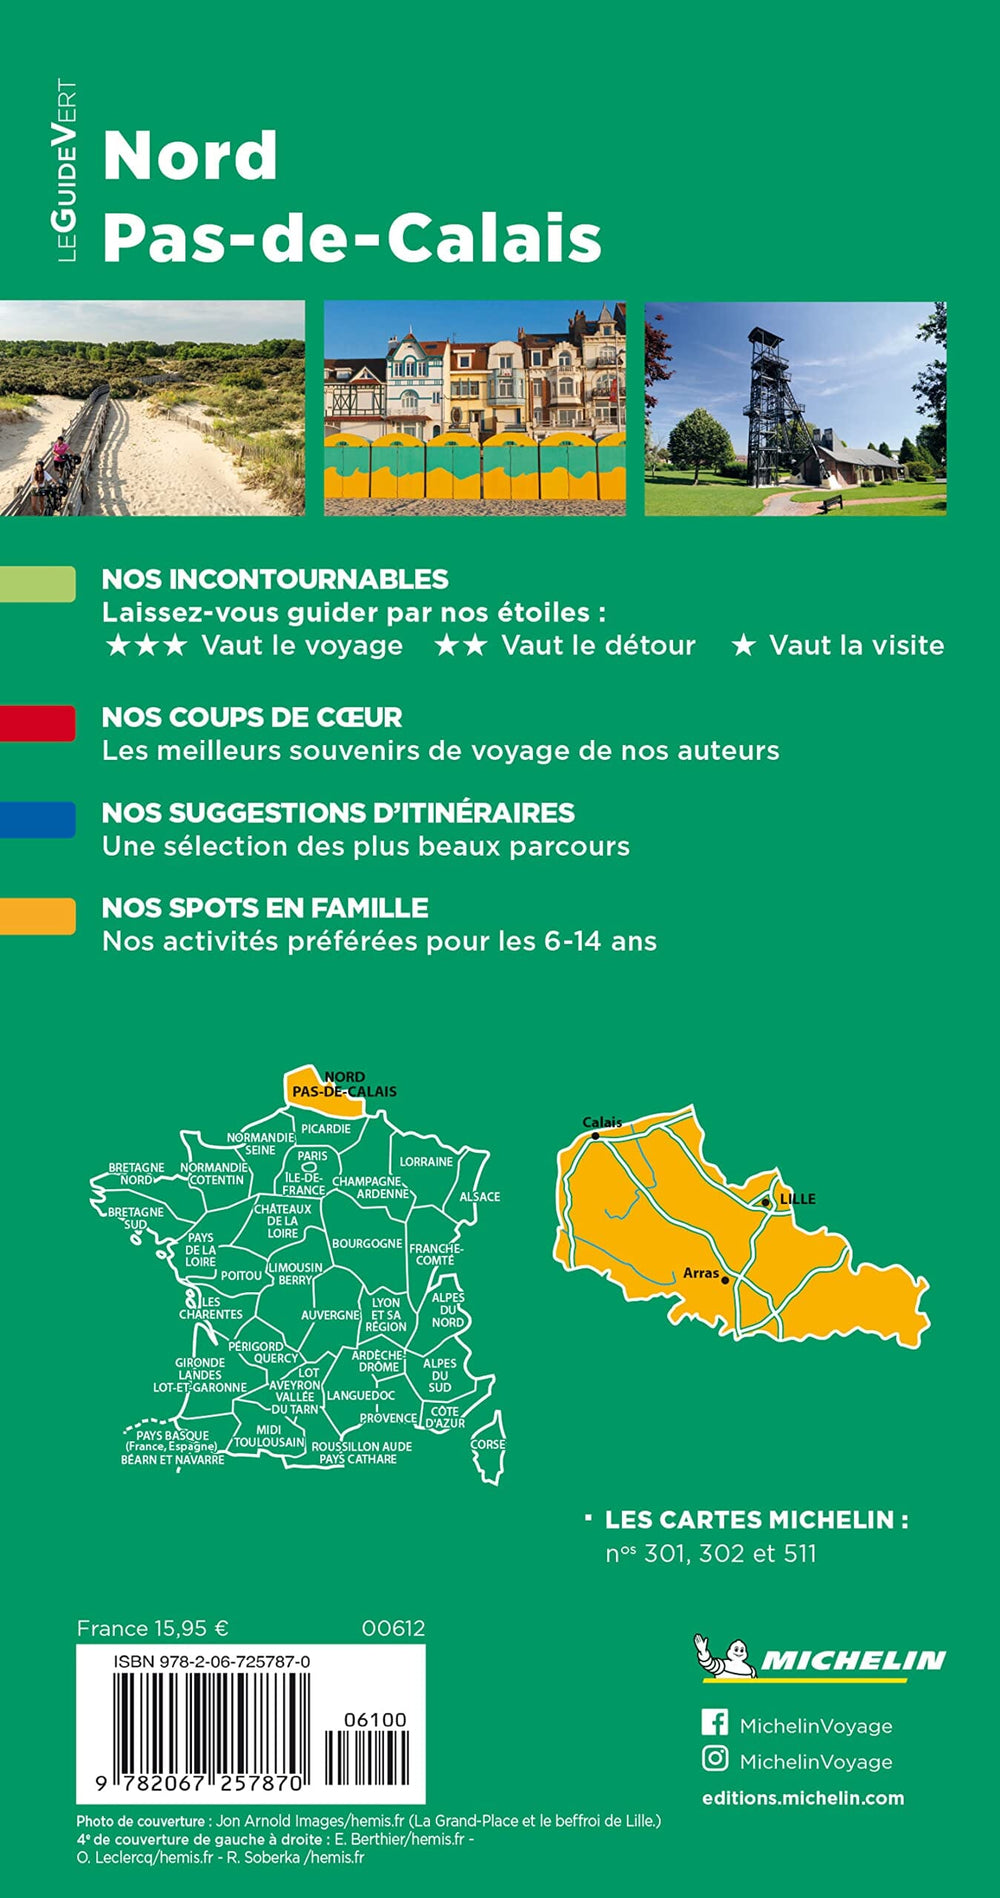 Guide Vert - Nord, Pas-de-Calais - Édition 2023 | Michelin guide de voyage Michelin 